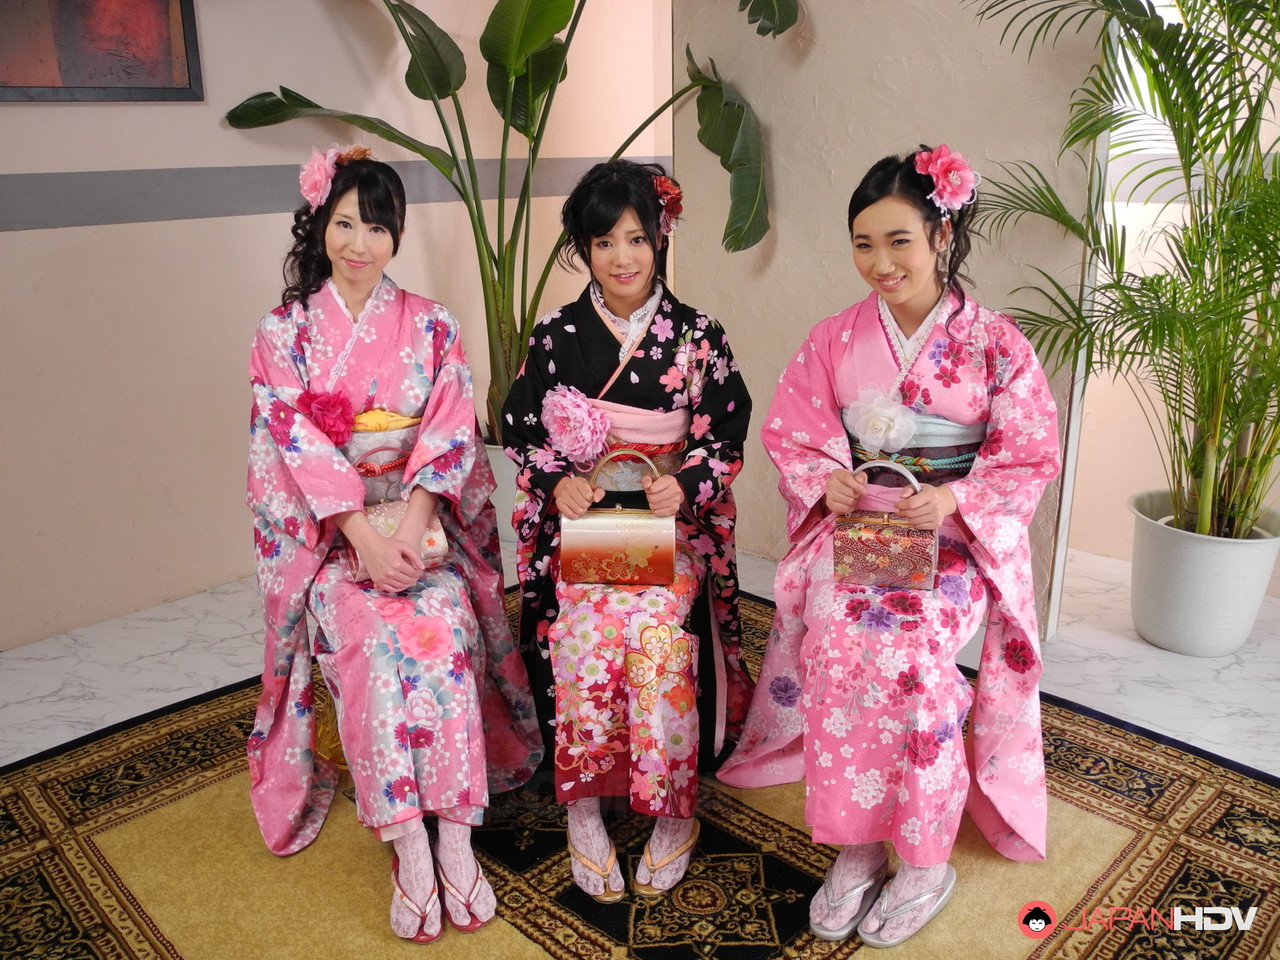 Sexy Asian girl Hina & her friends suck a dick wearing traditional Asian robes foto porno #424210118 | Japan HDV Pics, Hina, Sanae Momoi, Uta Kohaku, CFNM, porno ponsel